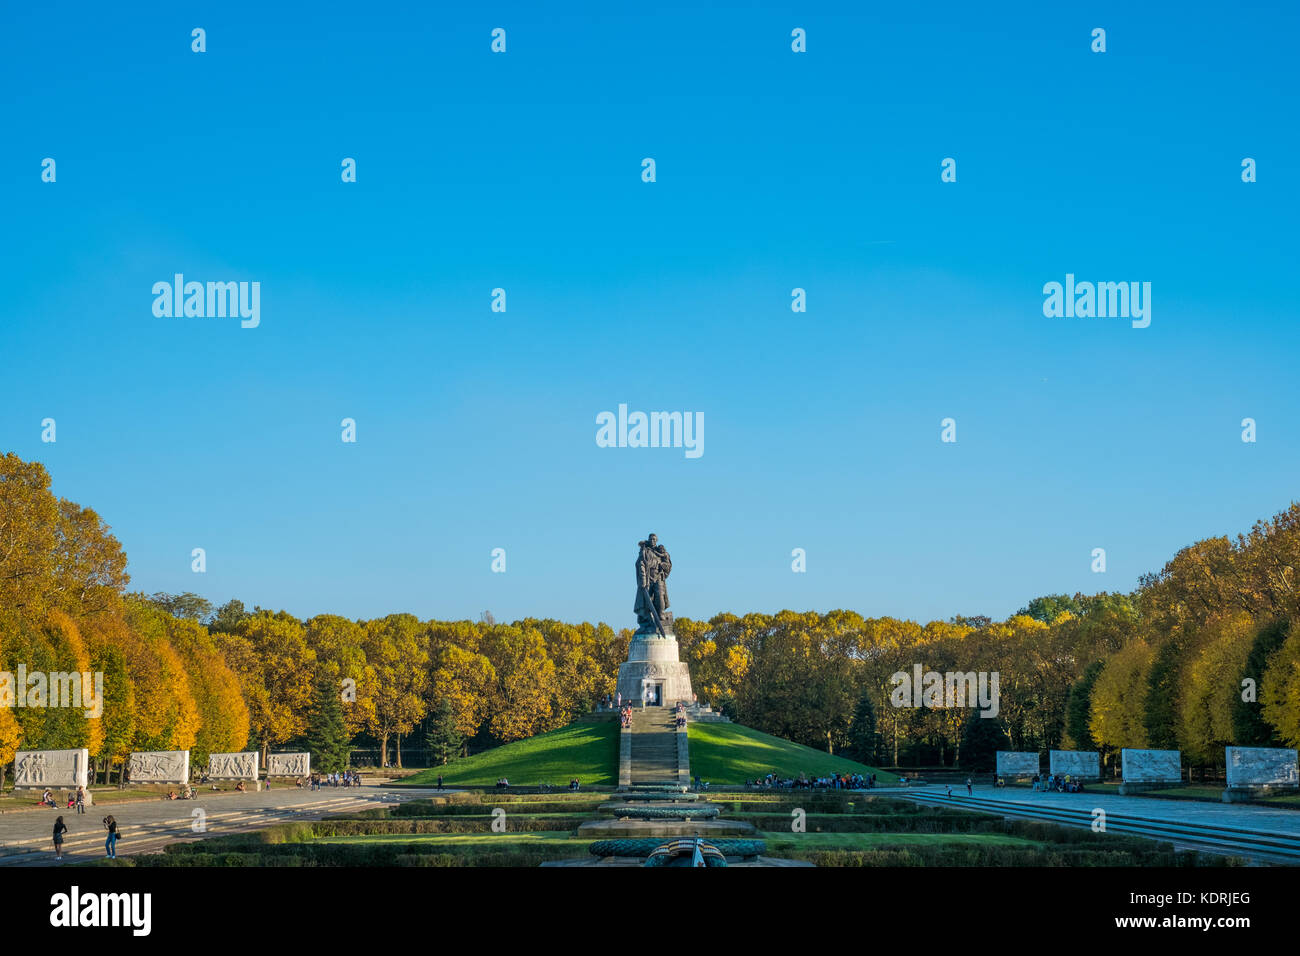 Berlin, Germany - october 2017: The Soviet War Memorial  in Berlin's Treptower Park Stock Photo